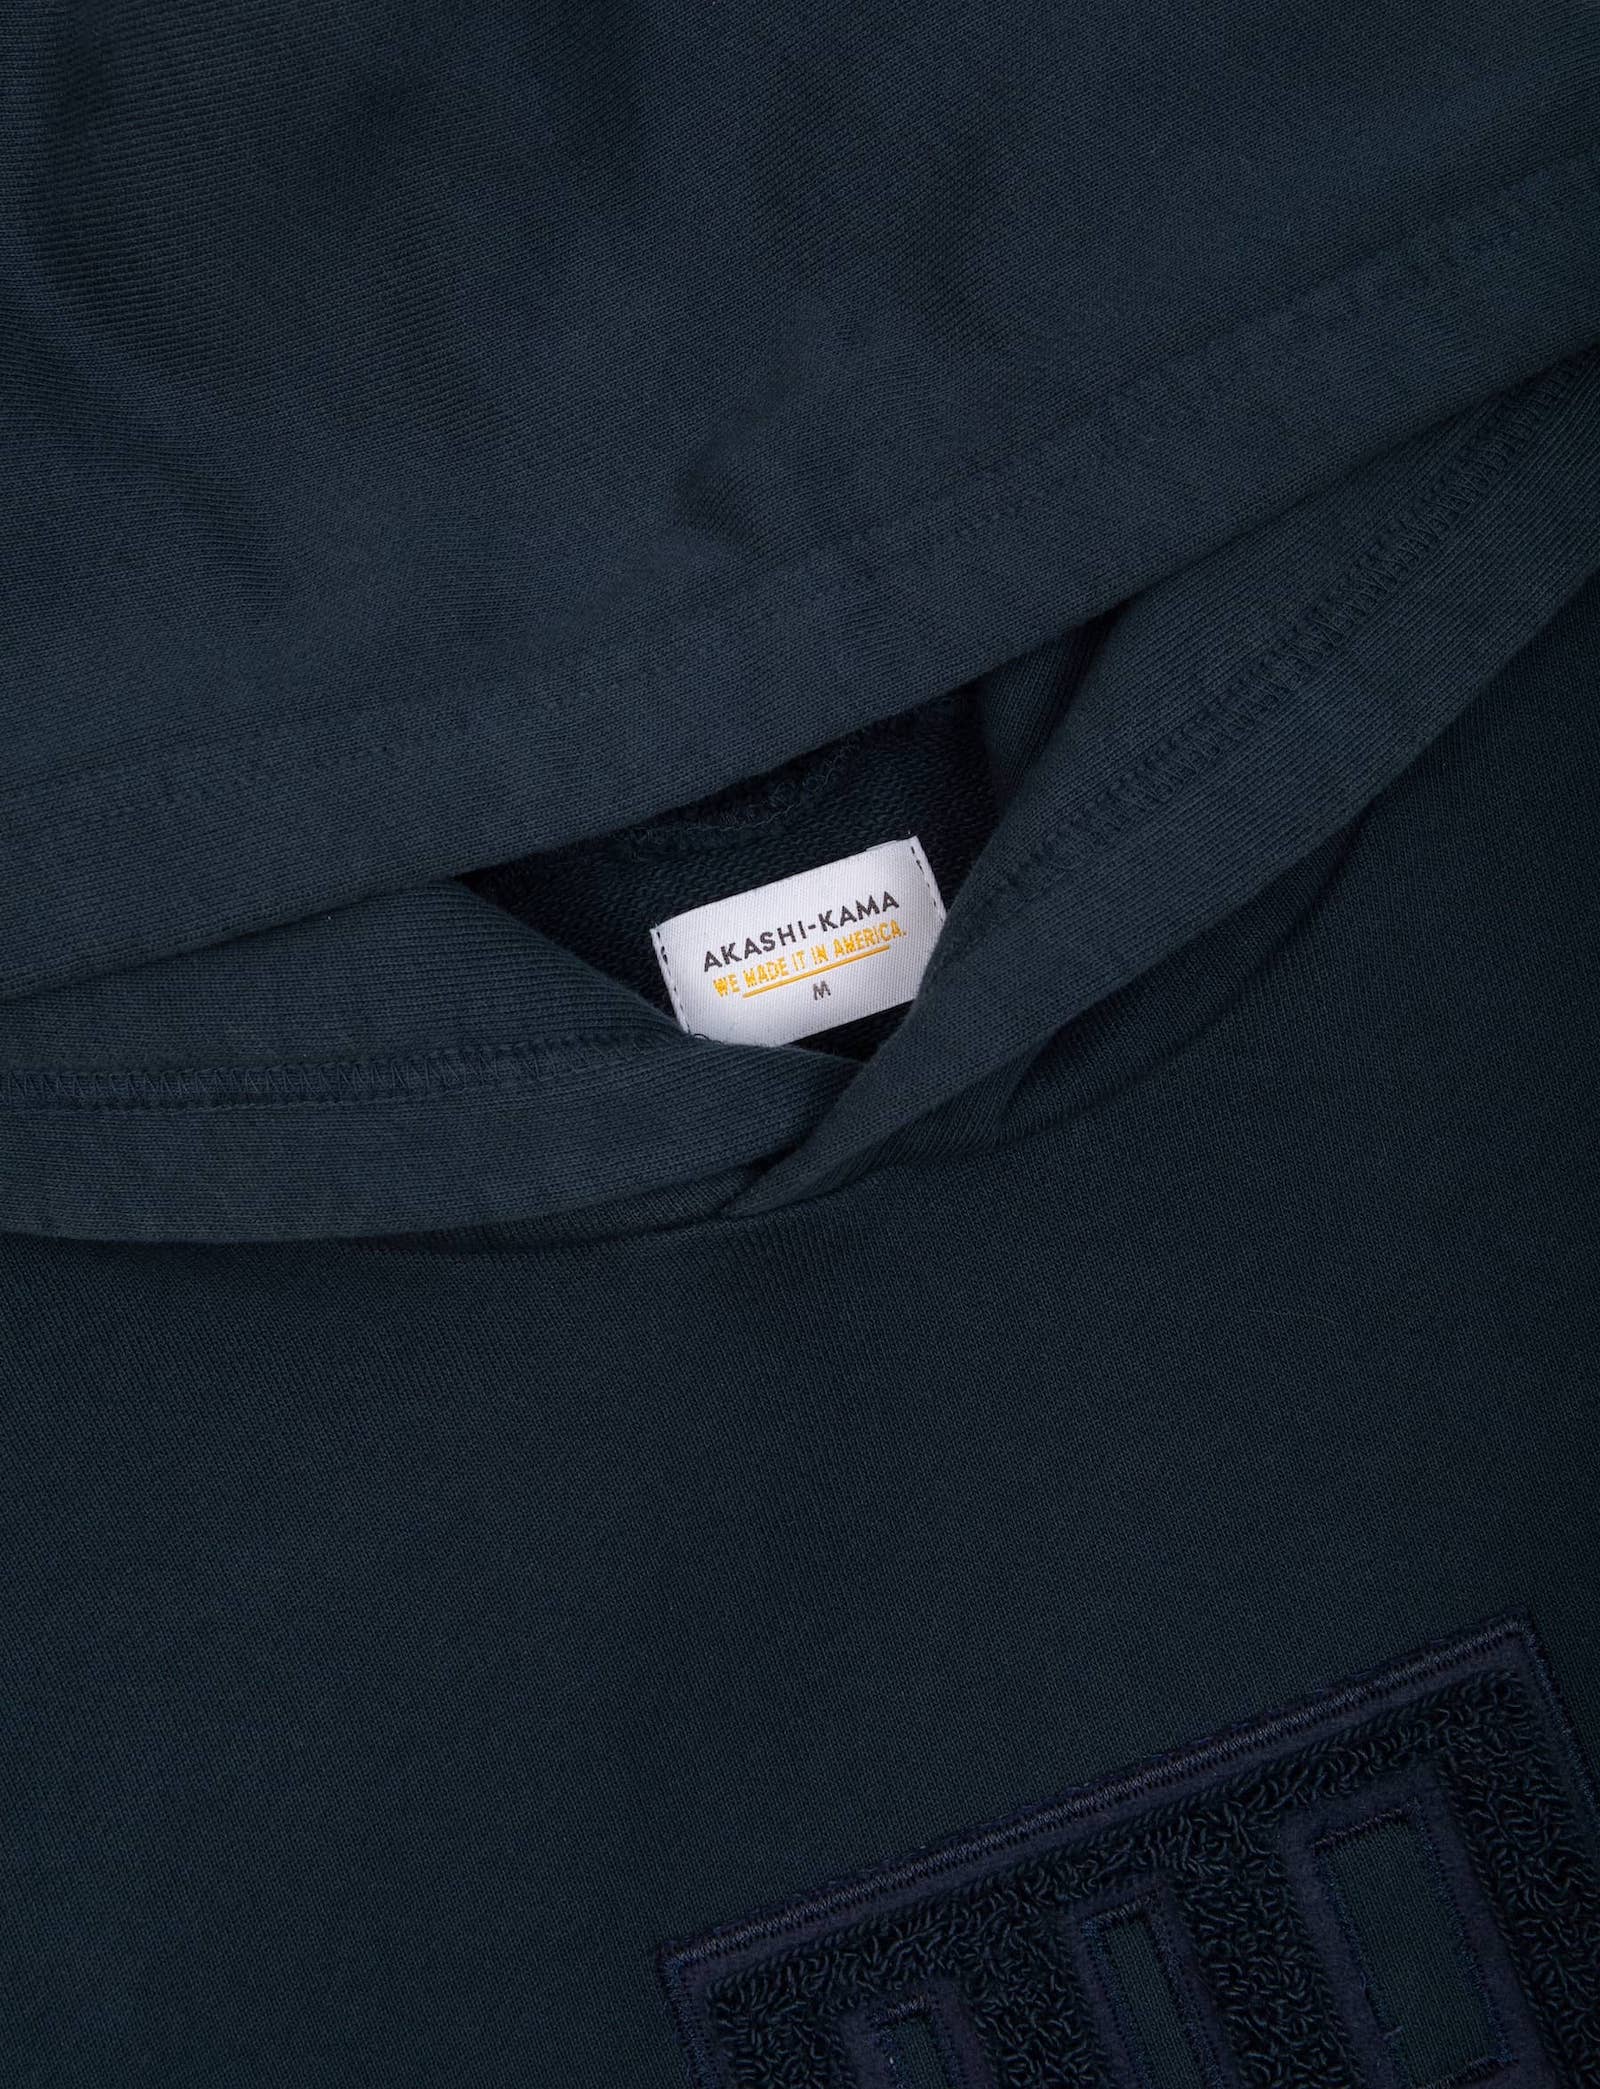 Chenille Texture Kanji Patch Hoodie AKASHI-KAMA Yonsei Navy Sweatshirt | Made in USA Garment Dye Streetwear   